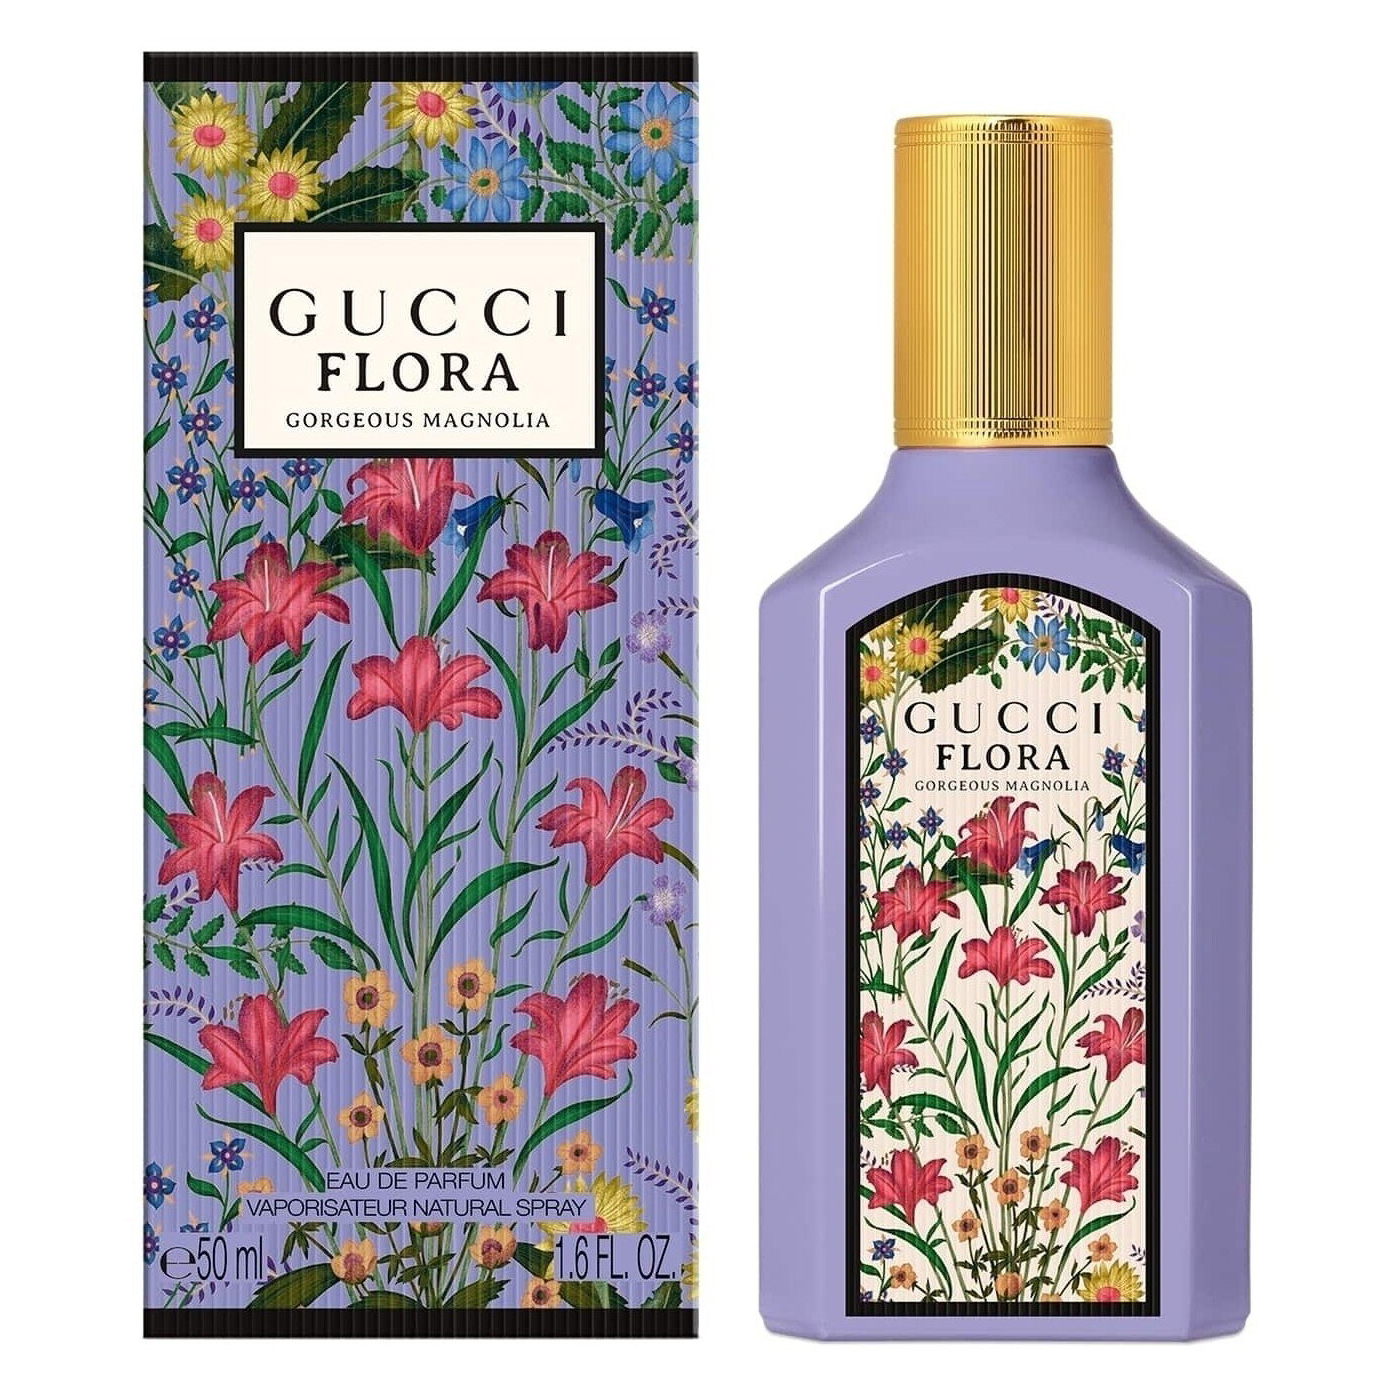 古驰Gucci的Flora Gorgeous Magnolia香水~ 新香水